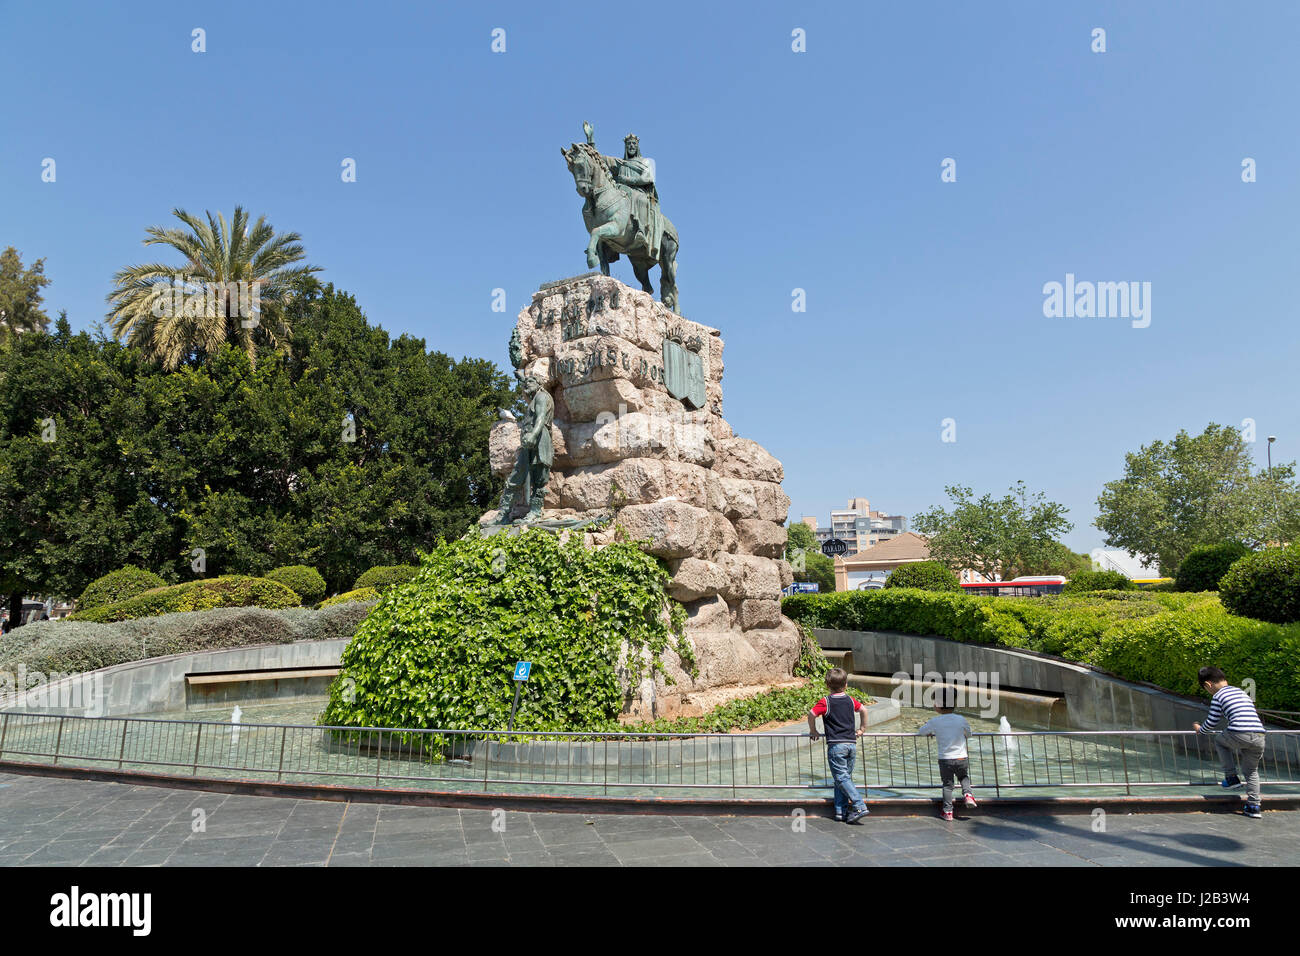 Statua di Rey Jaume I a Plaza Espanya in Palma de Mallorca, Spagna Foto Stock